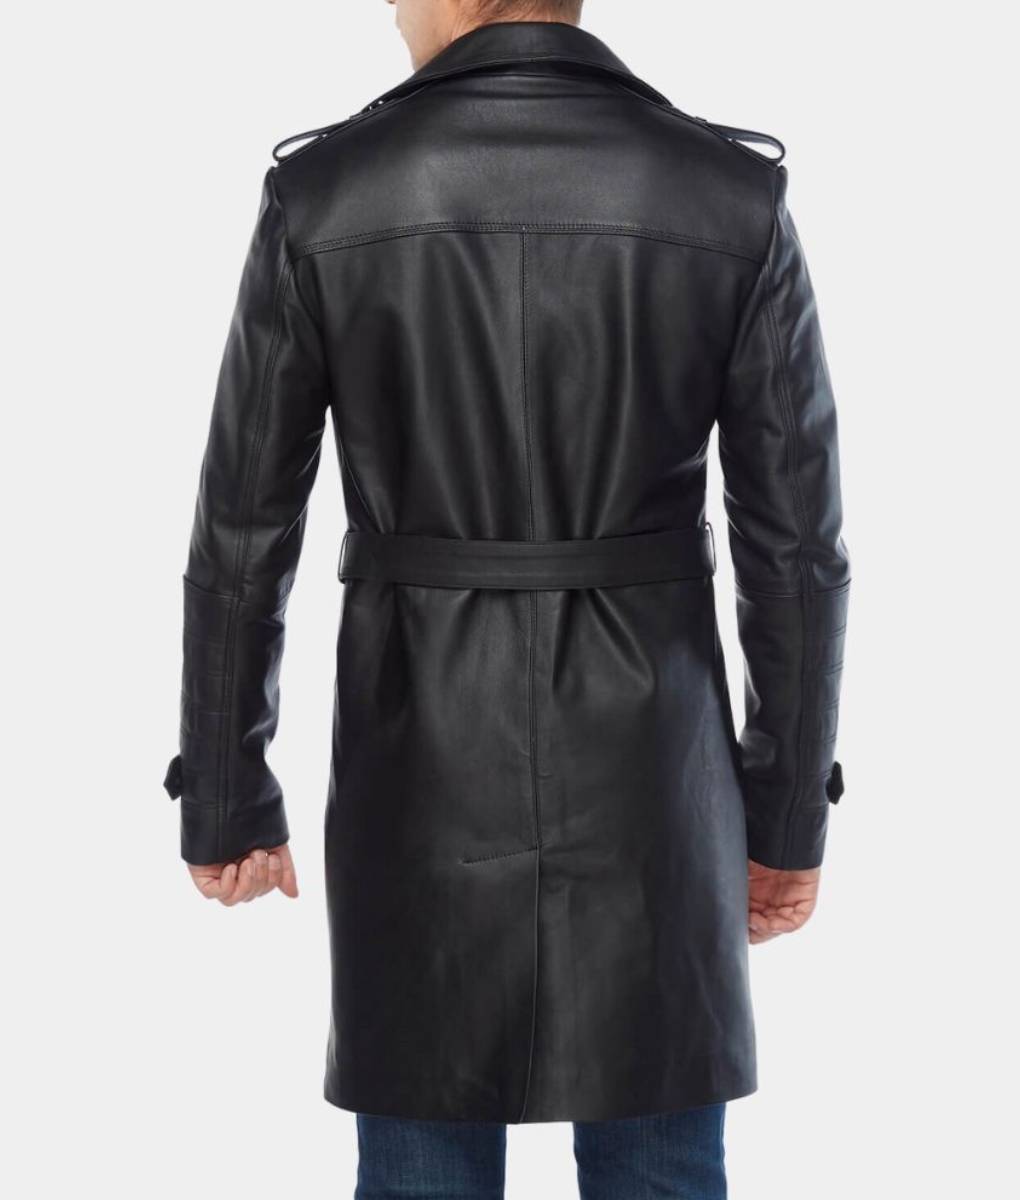 Silent Night Godlock Black Leather Jacket – 3/4 Length Car Coat with Waist Belt – Back View – 1